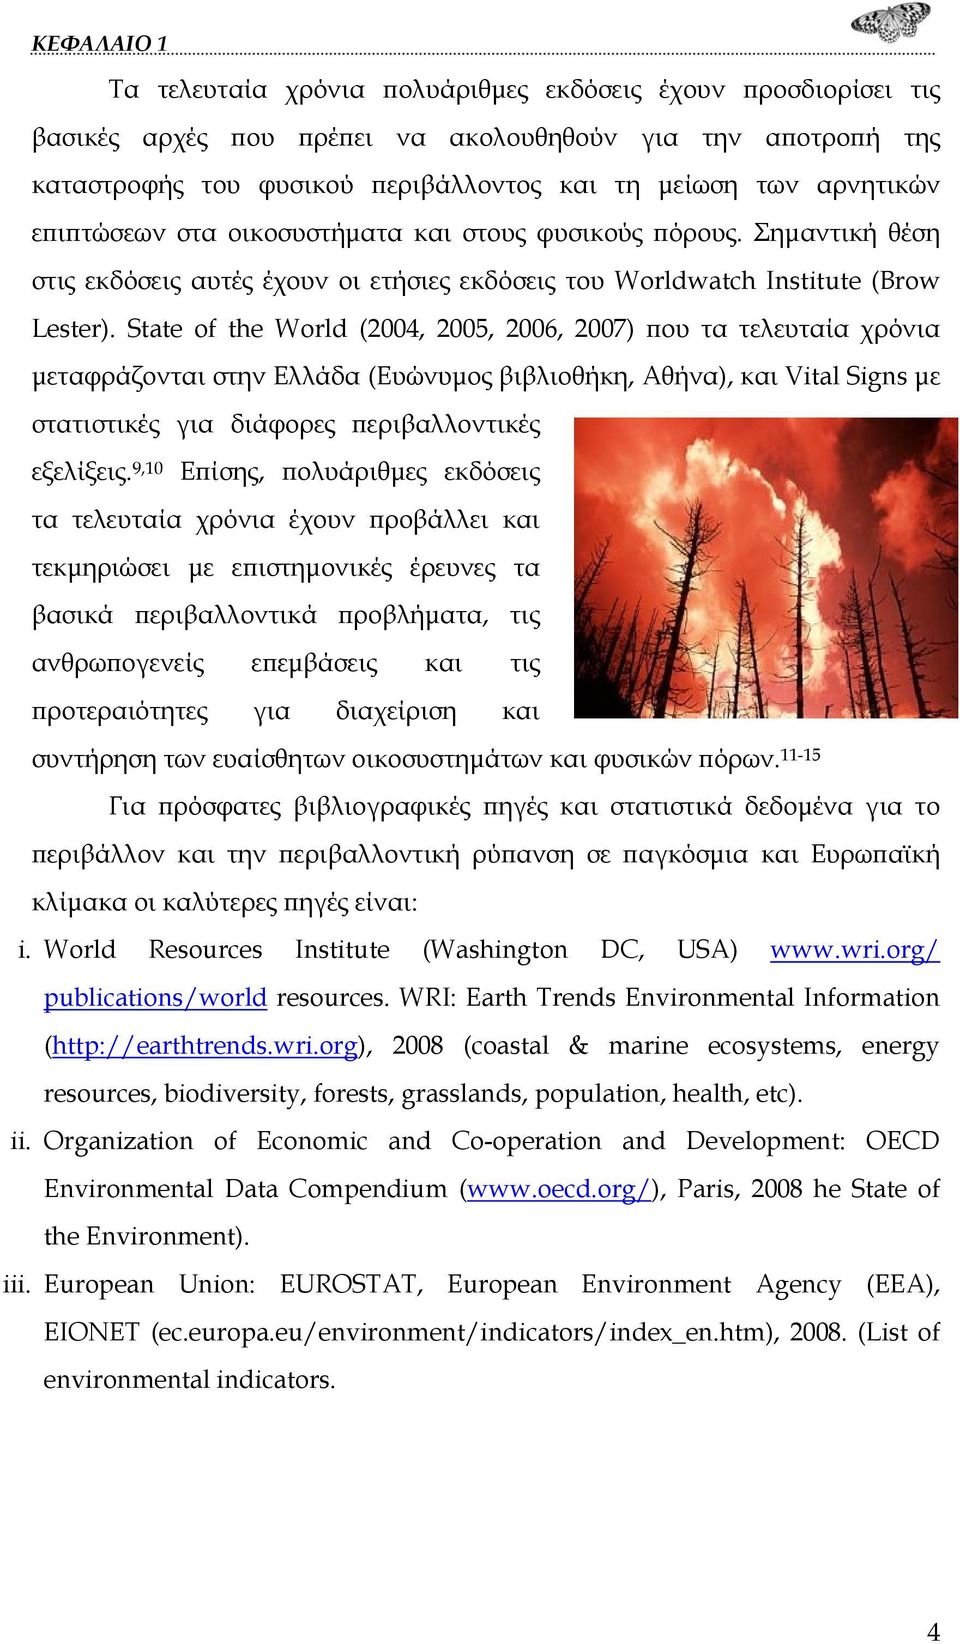 State of the World (2004, 2005, 2006, 2007) που τα τελευταία χρόνια μεταφράζονται στην Ελλάδα (Ευώνυμος βιβλιοθήκη, Αθήνα), και Vital Signs με στατιστικές για διάφορες περιβαλλοντικές εξελίξεις.